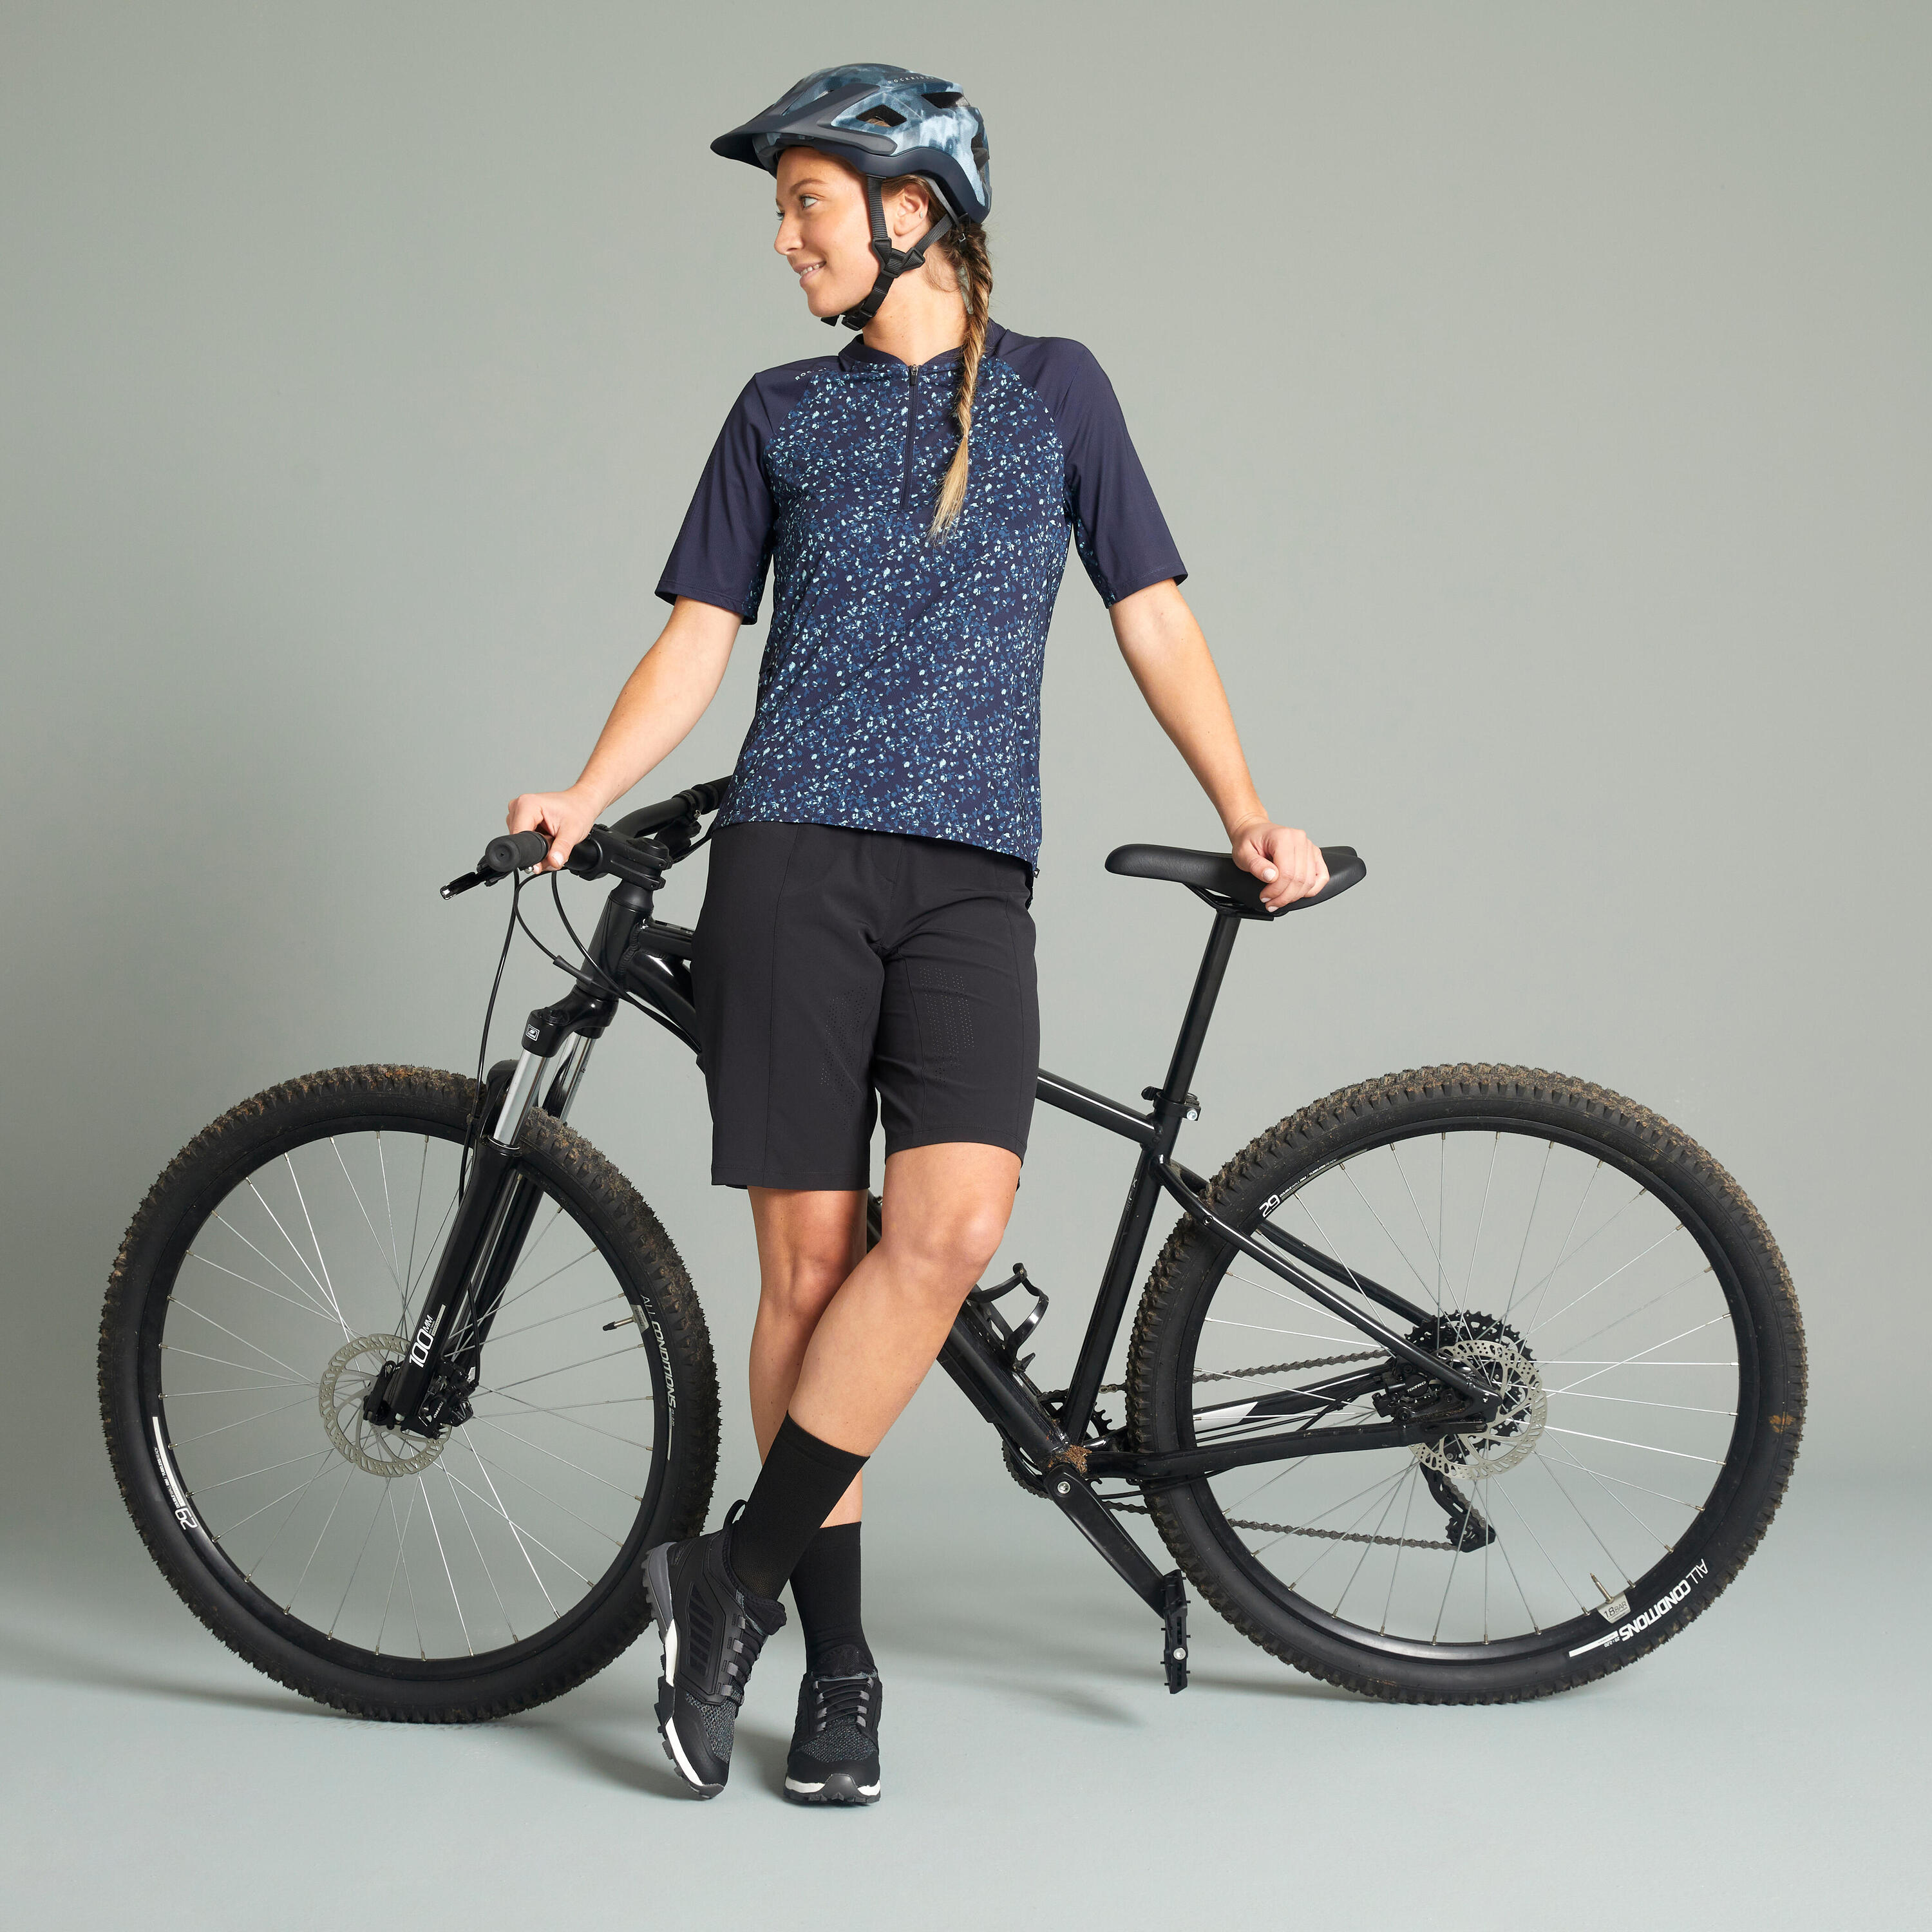 Women's Mountain Biking Shorts Expl 700 - Black 4/9